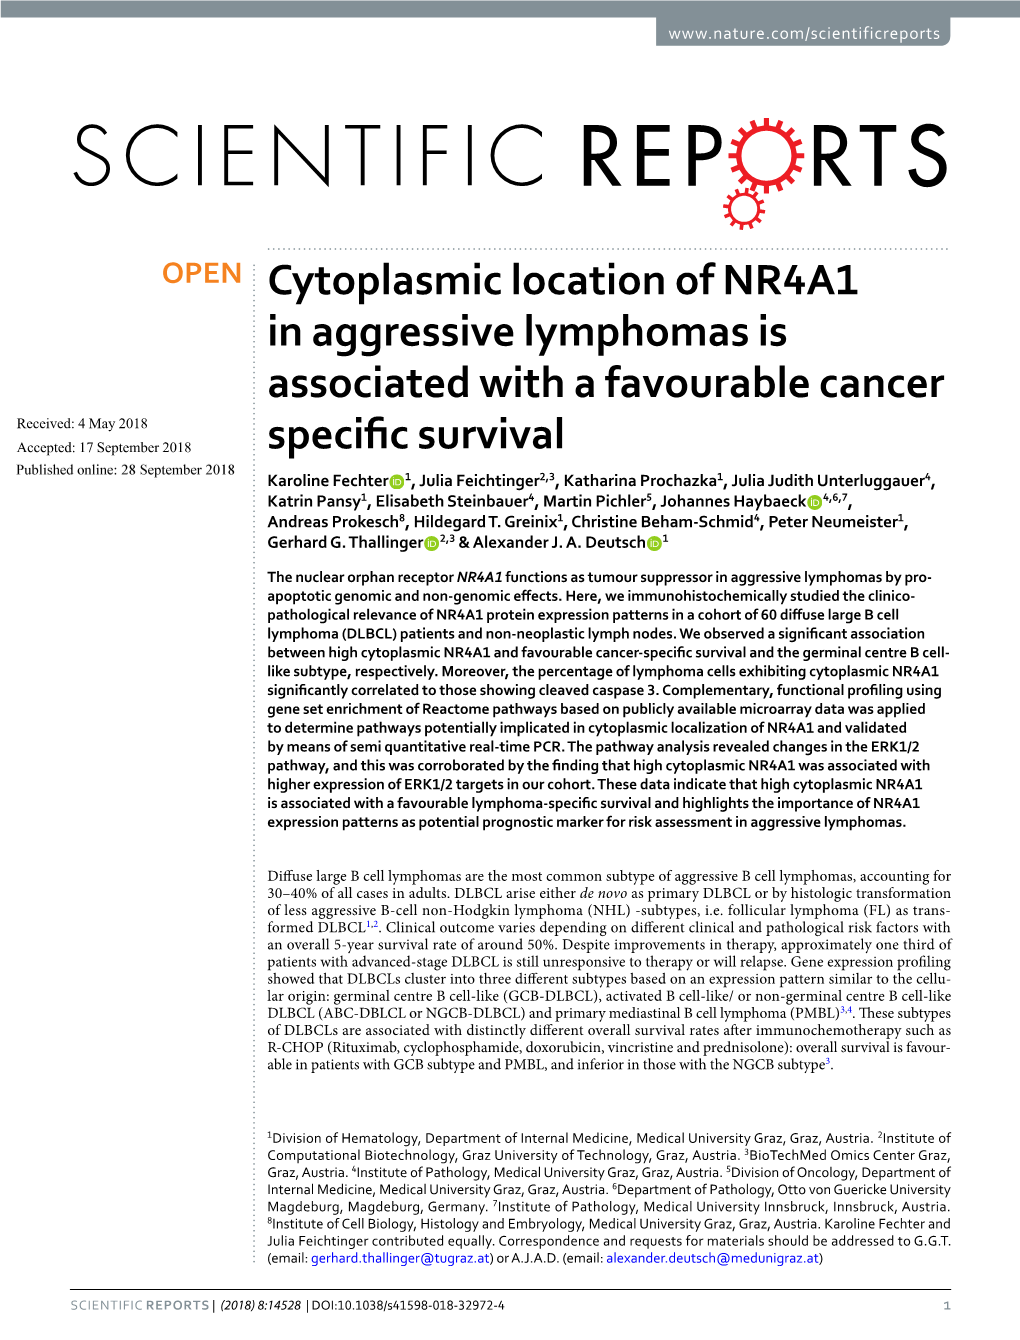 Cytoplasmic Location of NR4A1 in Aggressive Lymphomas Is